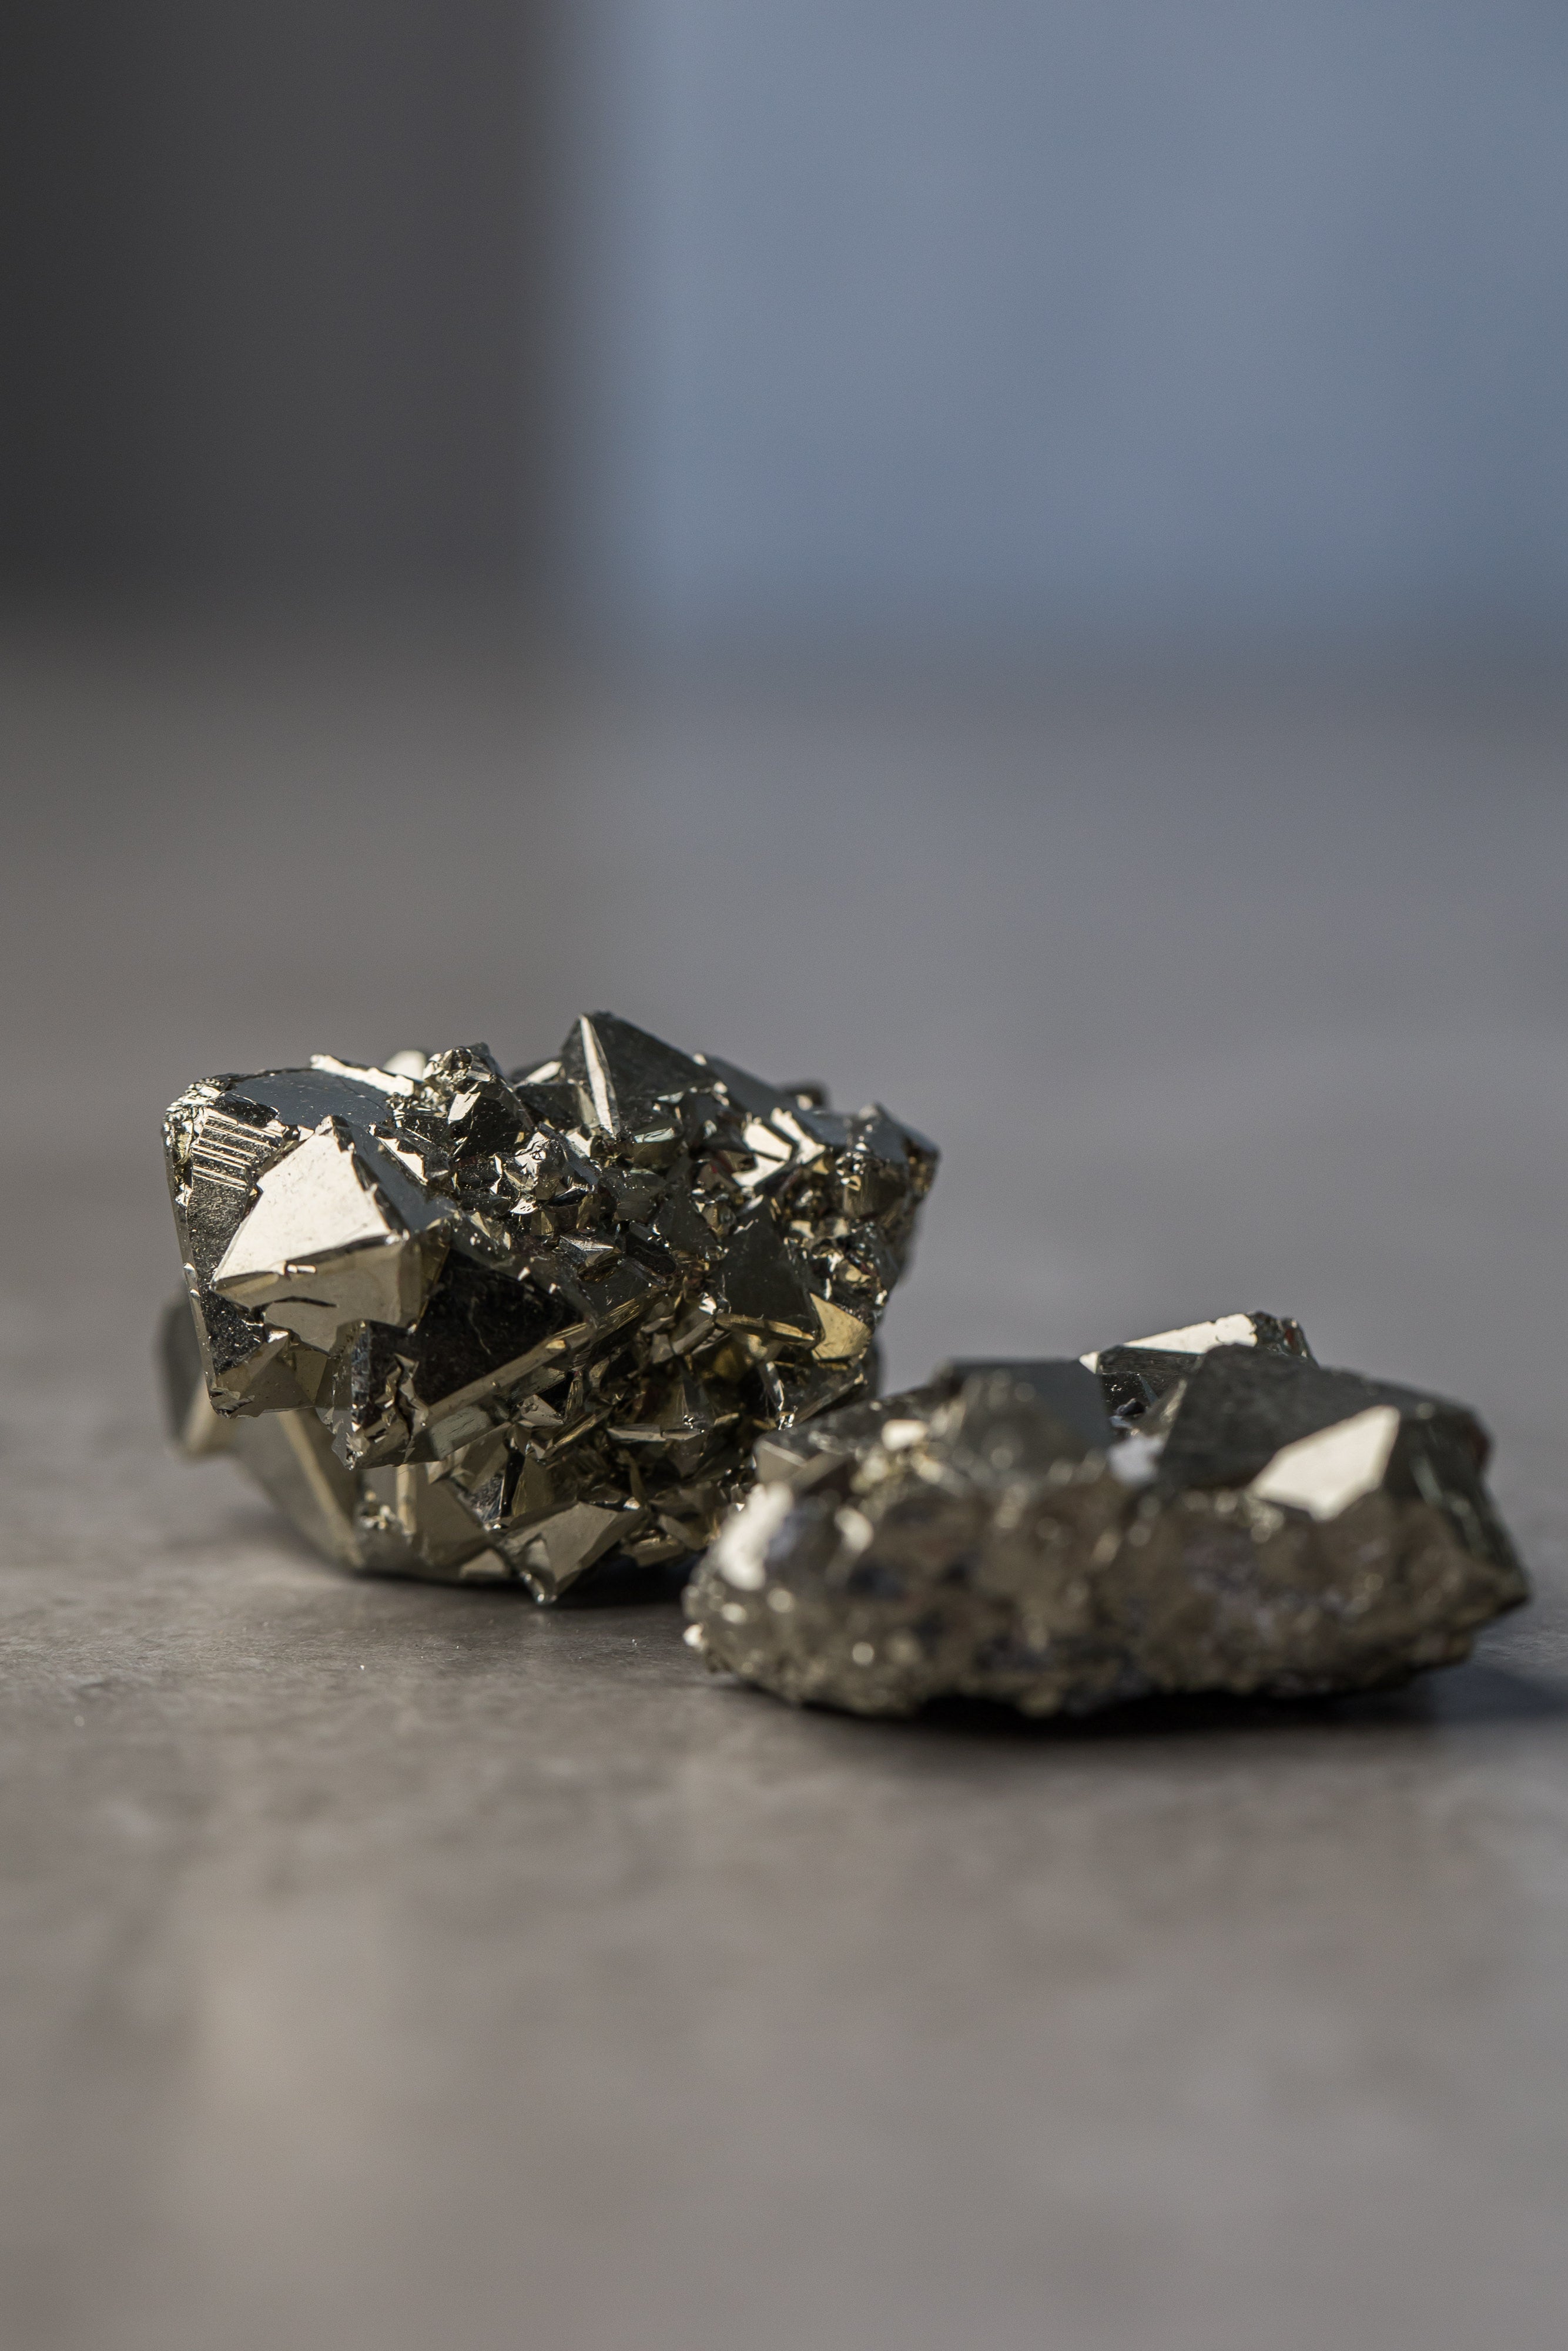 Small Raw Pyrite Cluster - Energising Crystal for Abundance, Confidence & Solar Plexus Chakra Balance - Everyday Rocks